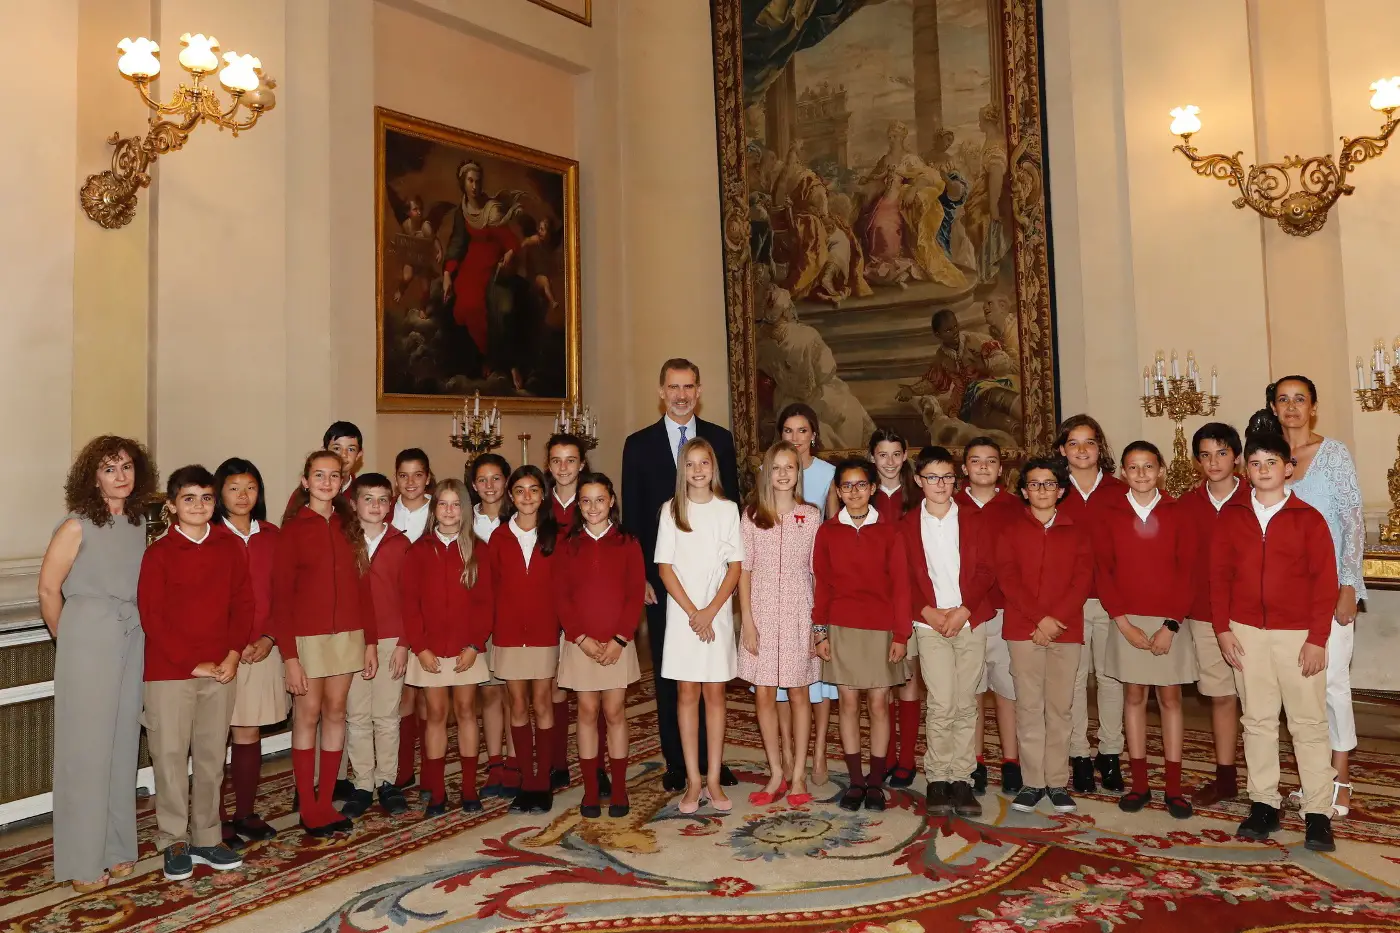 Queen Letizia in Baby Blue dress at Order of Merit Presentation